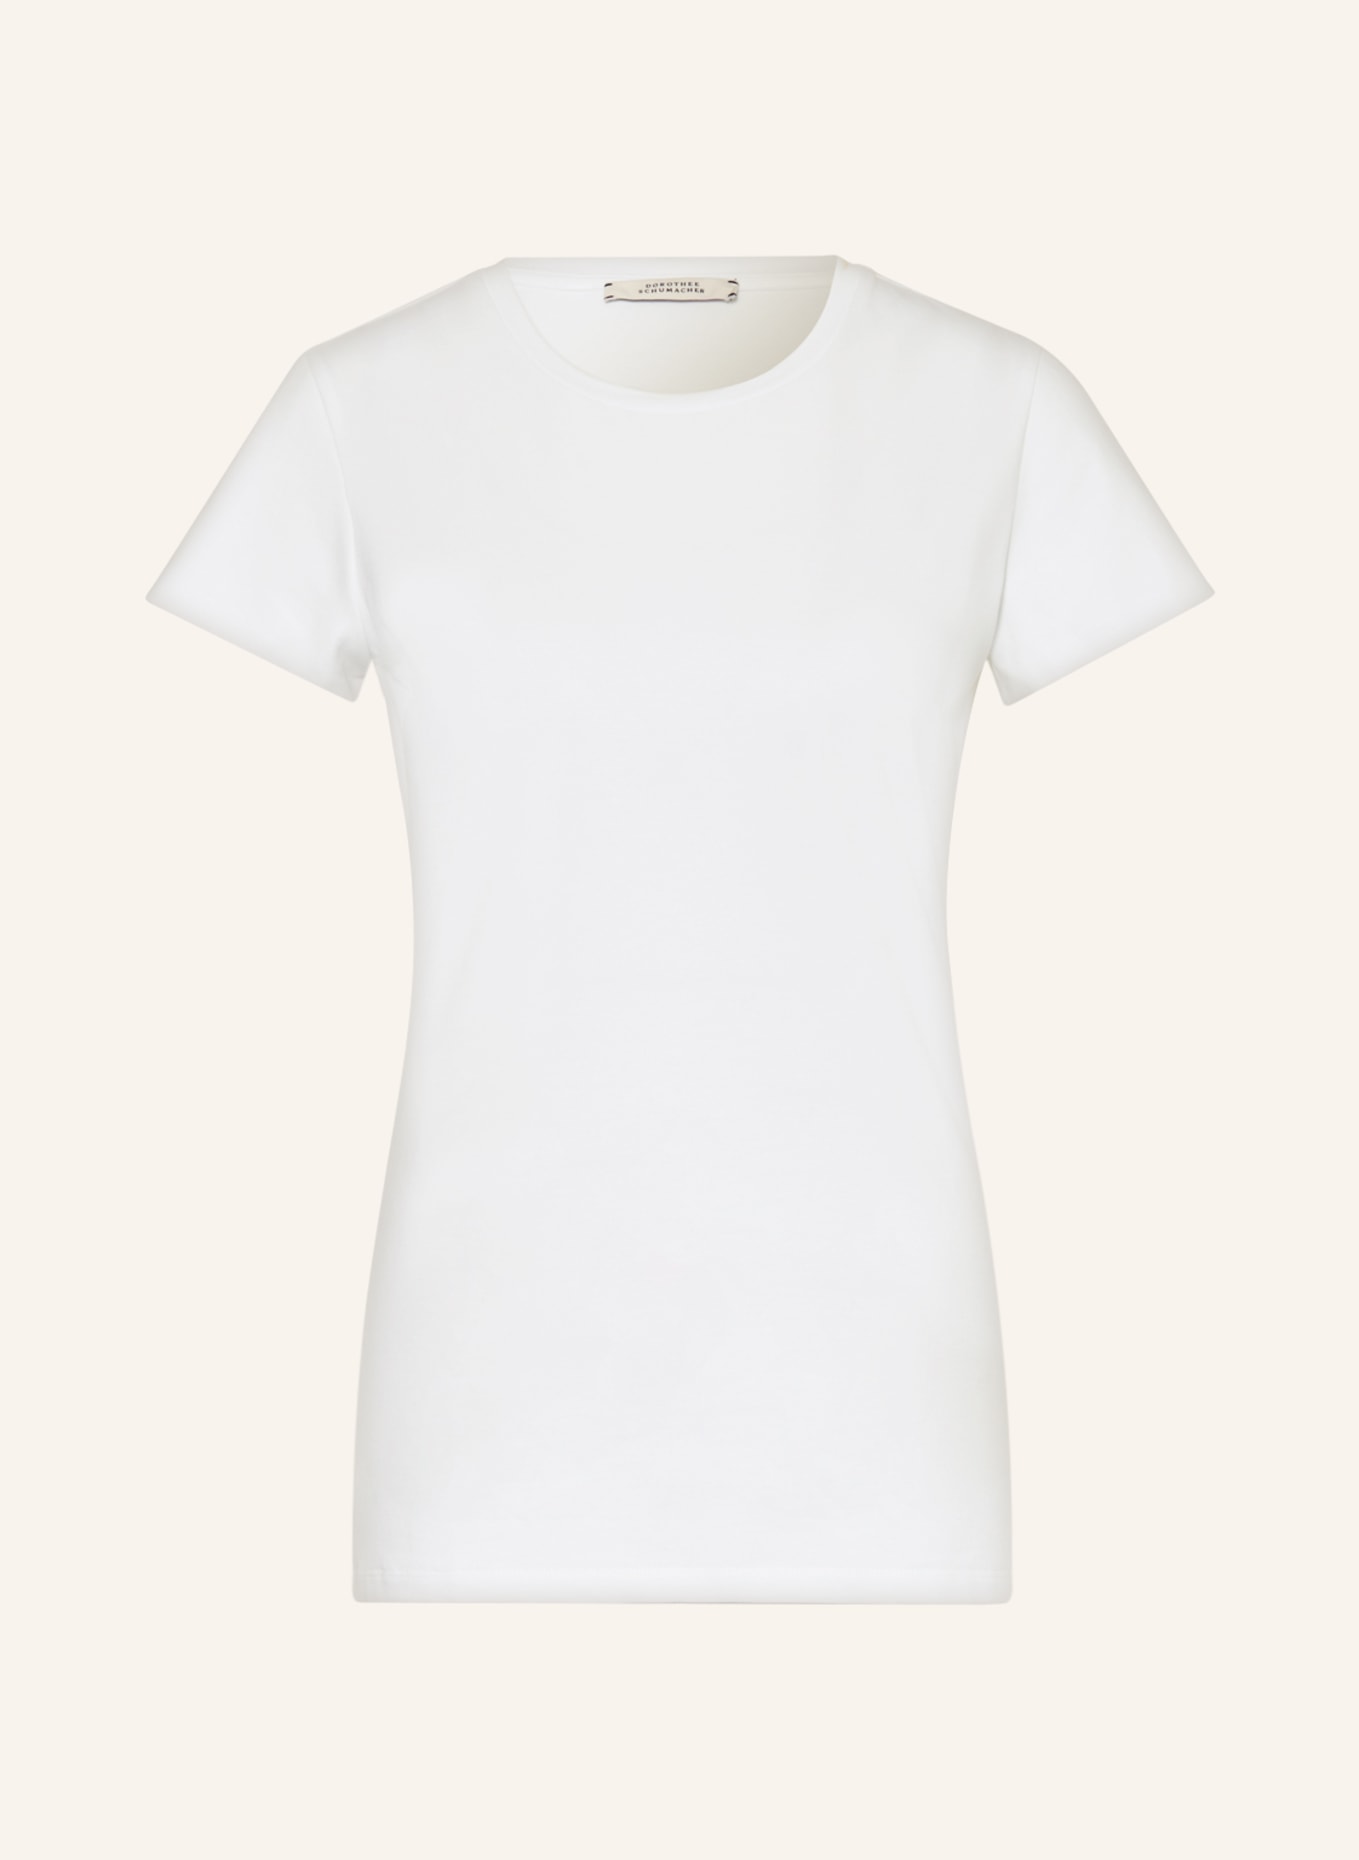 DOROTHEE SCHUMACHER T-Shirt, Farbe: WEISS (Bild 1)